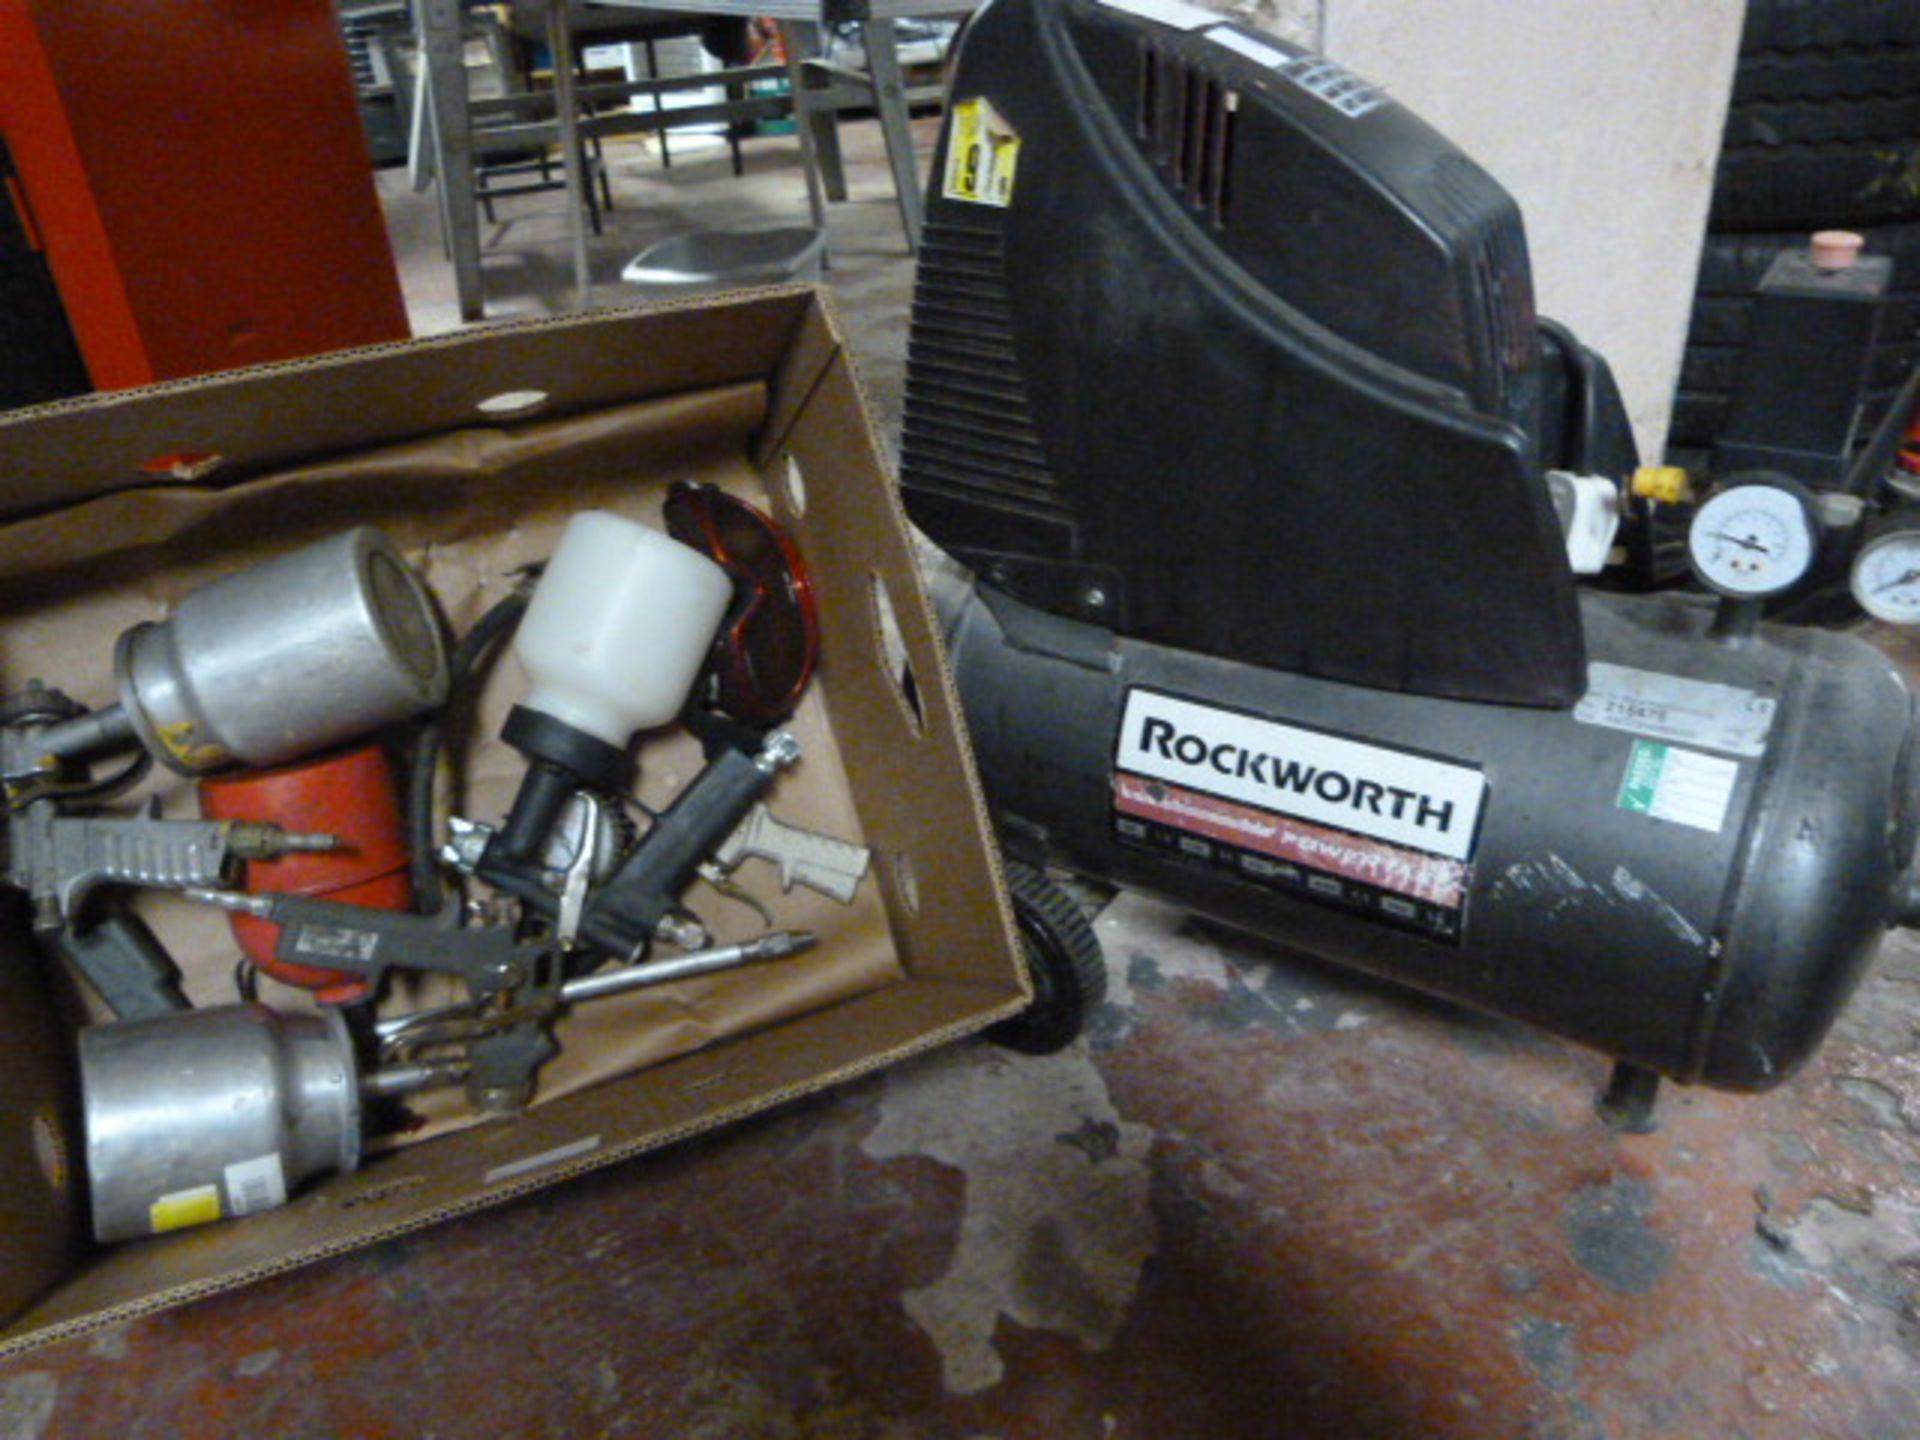 Rockworth Power Fast Compressor with Box of Spray Guns etc